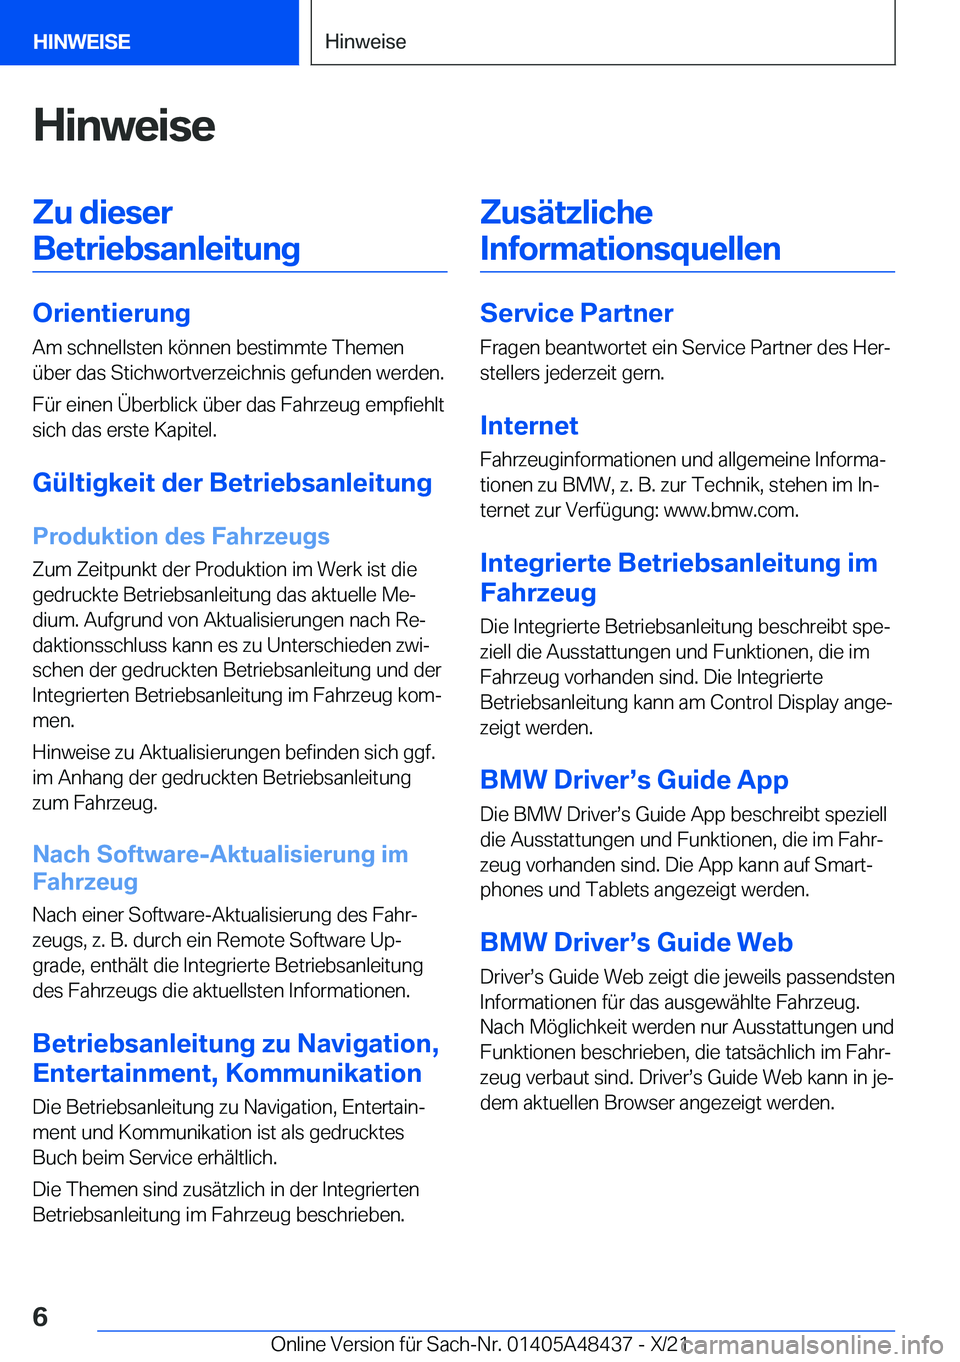 BMW X7 2022  Betriebsanleitungen (in German) �H�i�n�w�e�i�s�e�Z�u��d�i�e�s�e�r�B�e�t�r�i�e�b�s�a�n�l�e�i�t�u�n�g
�O�r�i�e�n�t�i�e�r�u�n�g �A�m��s�c�h�n�e�l�l�s�t�e�n��k�